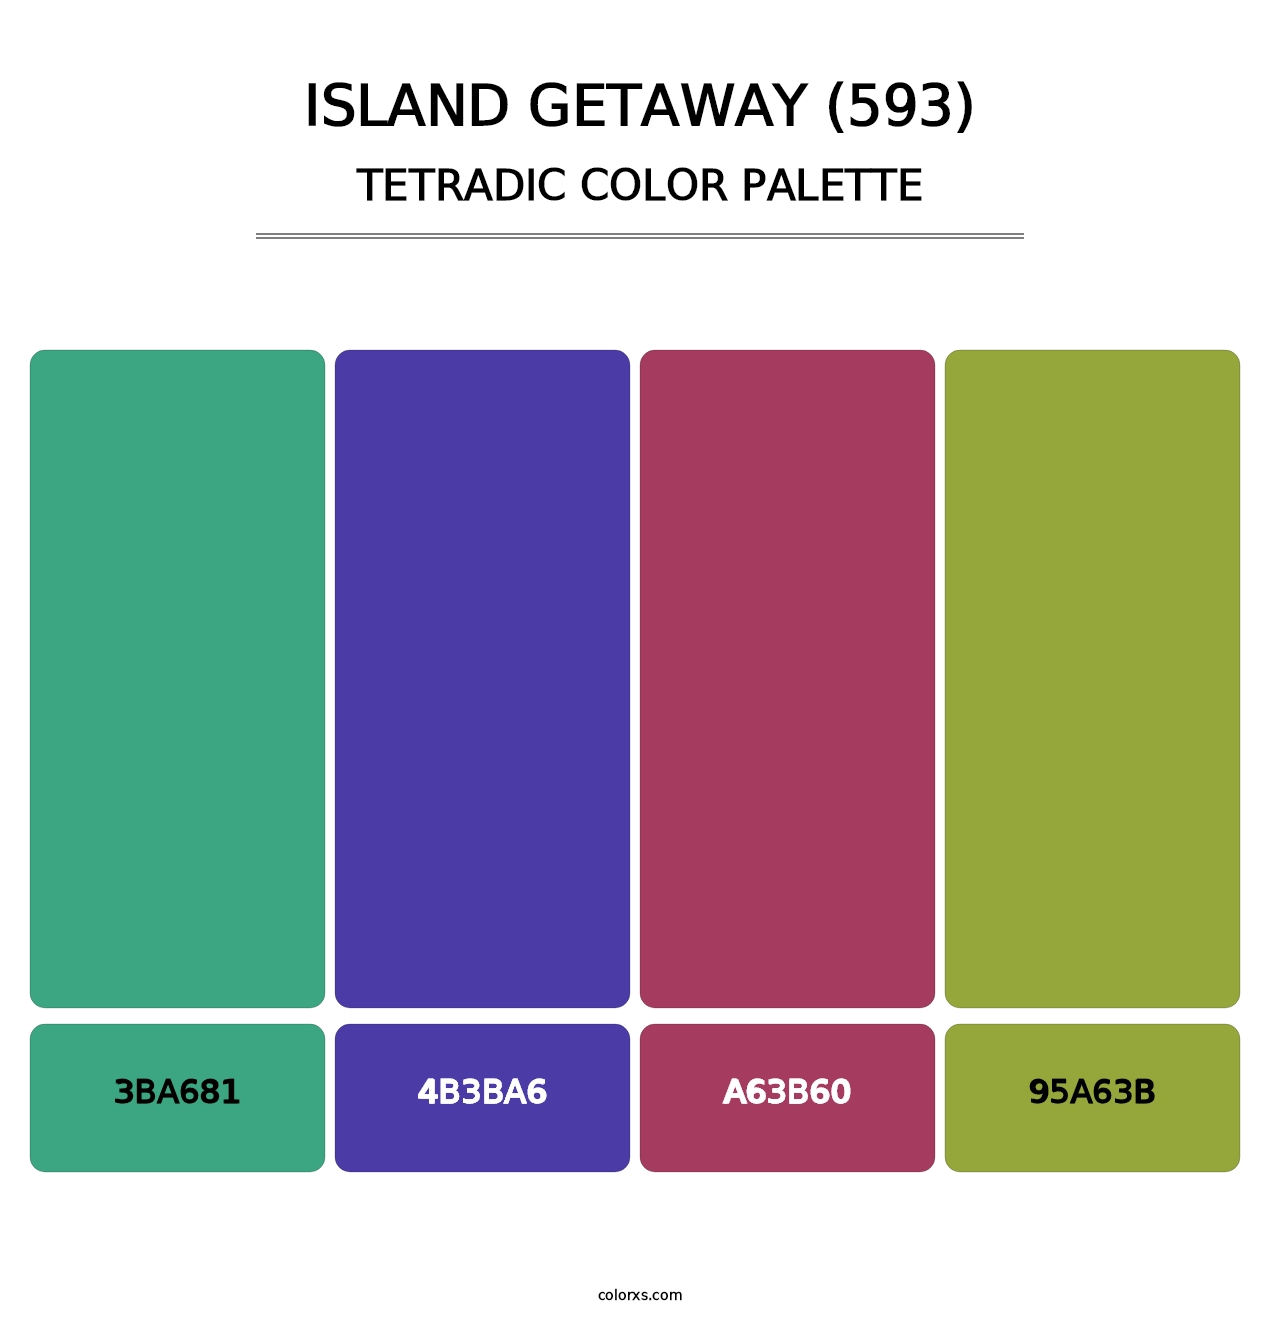 Island Getaway (593) - Tetradic Color Palette